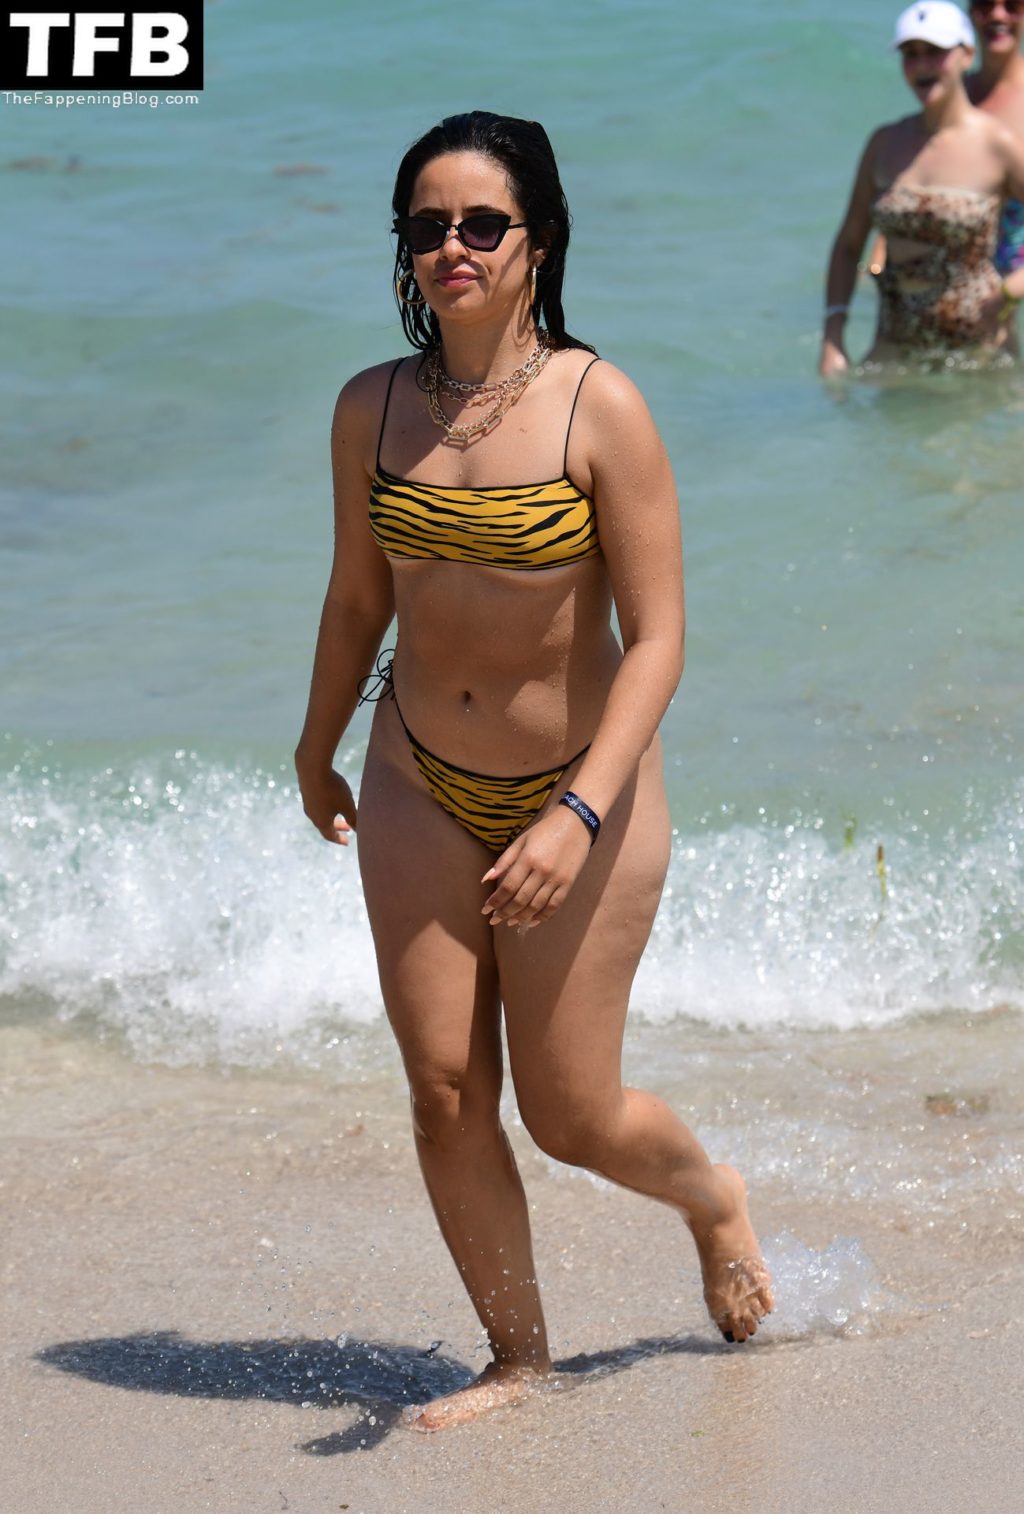 Camila Cabello Sexy The Fappening Blog 48 1024x1514 - Camila Cabello Displays Her Summer-Ready Body in Miami (108 Photos)